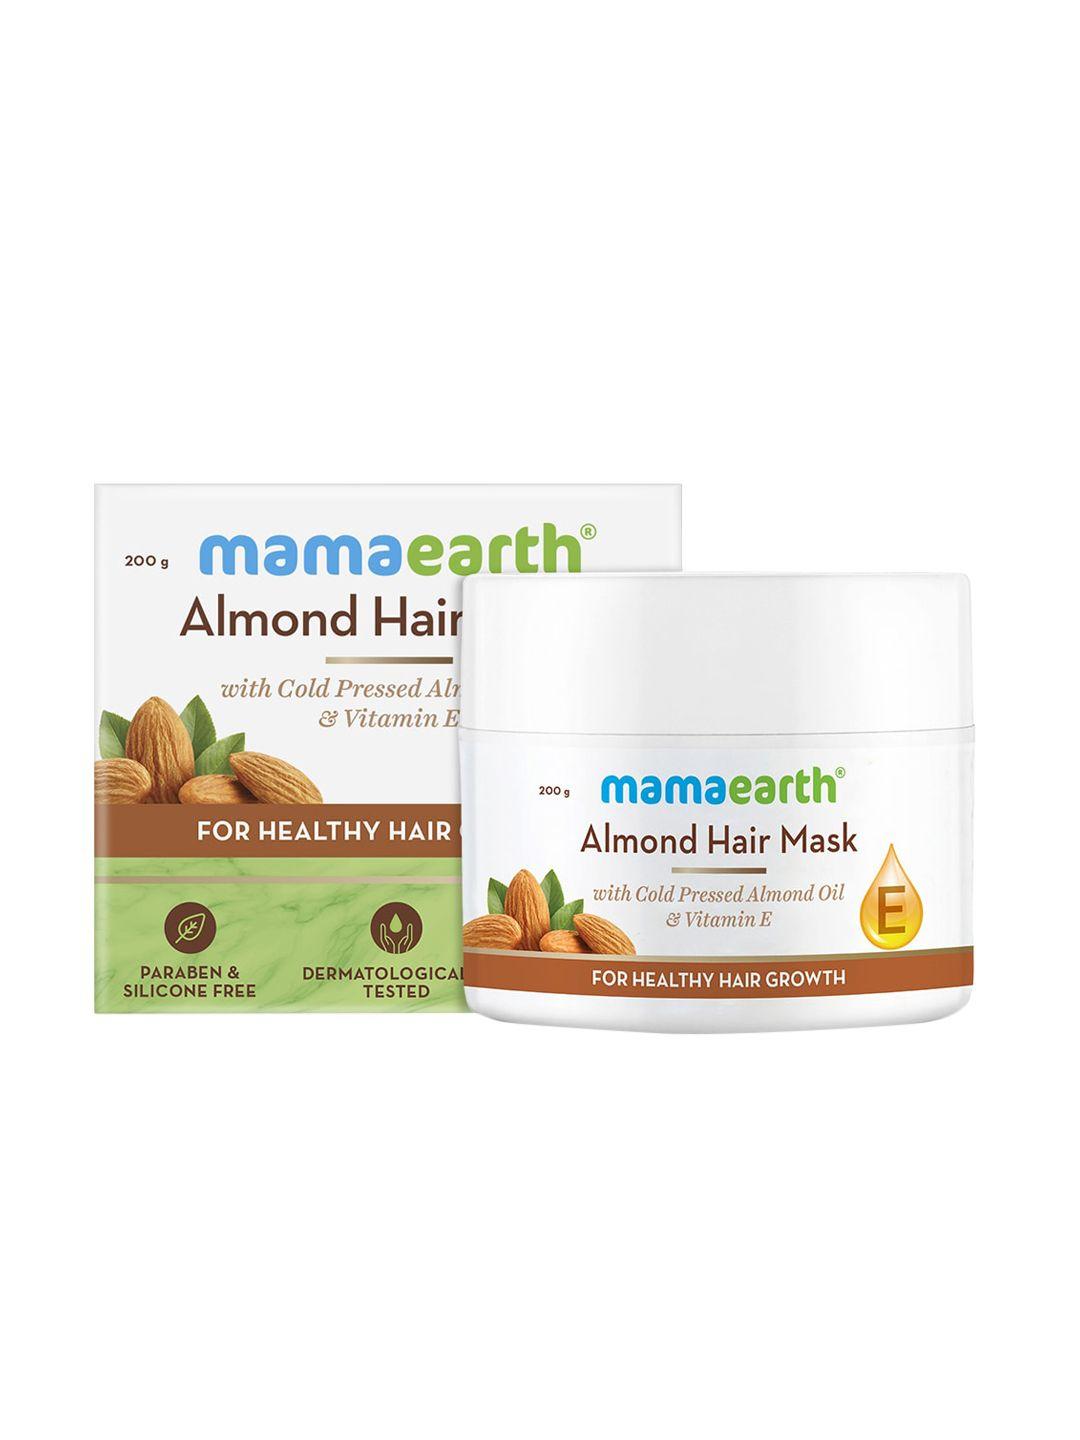 mamaearth almond hair mask with vitamin e for healthy hair growth 200 g